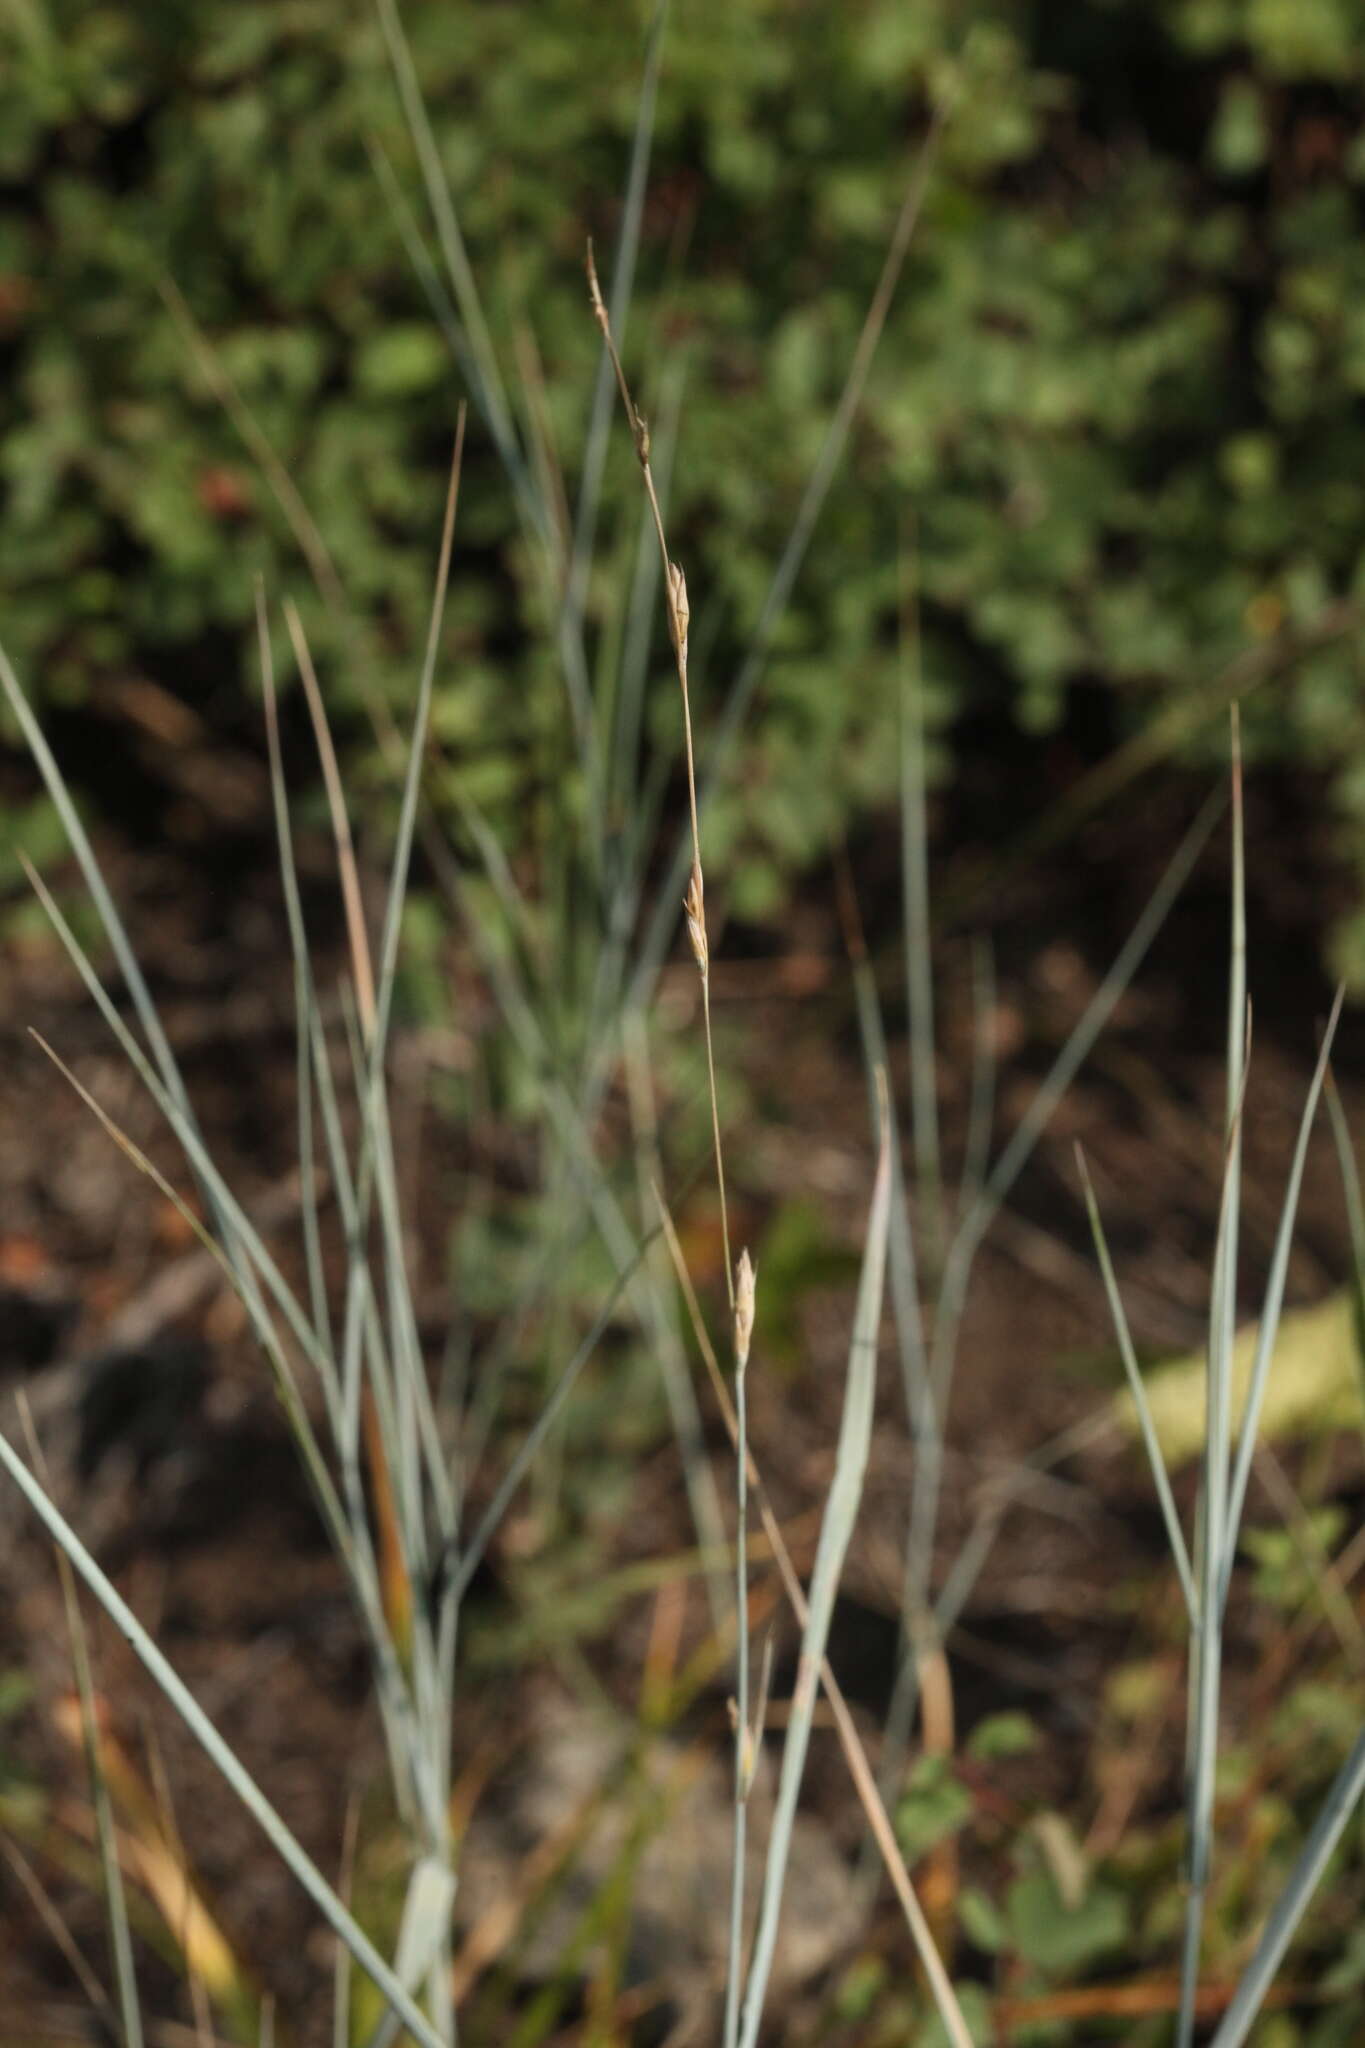 Image of Elymus bungeanus (Trin.) Melderis